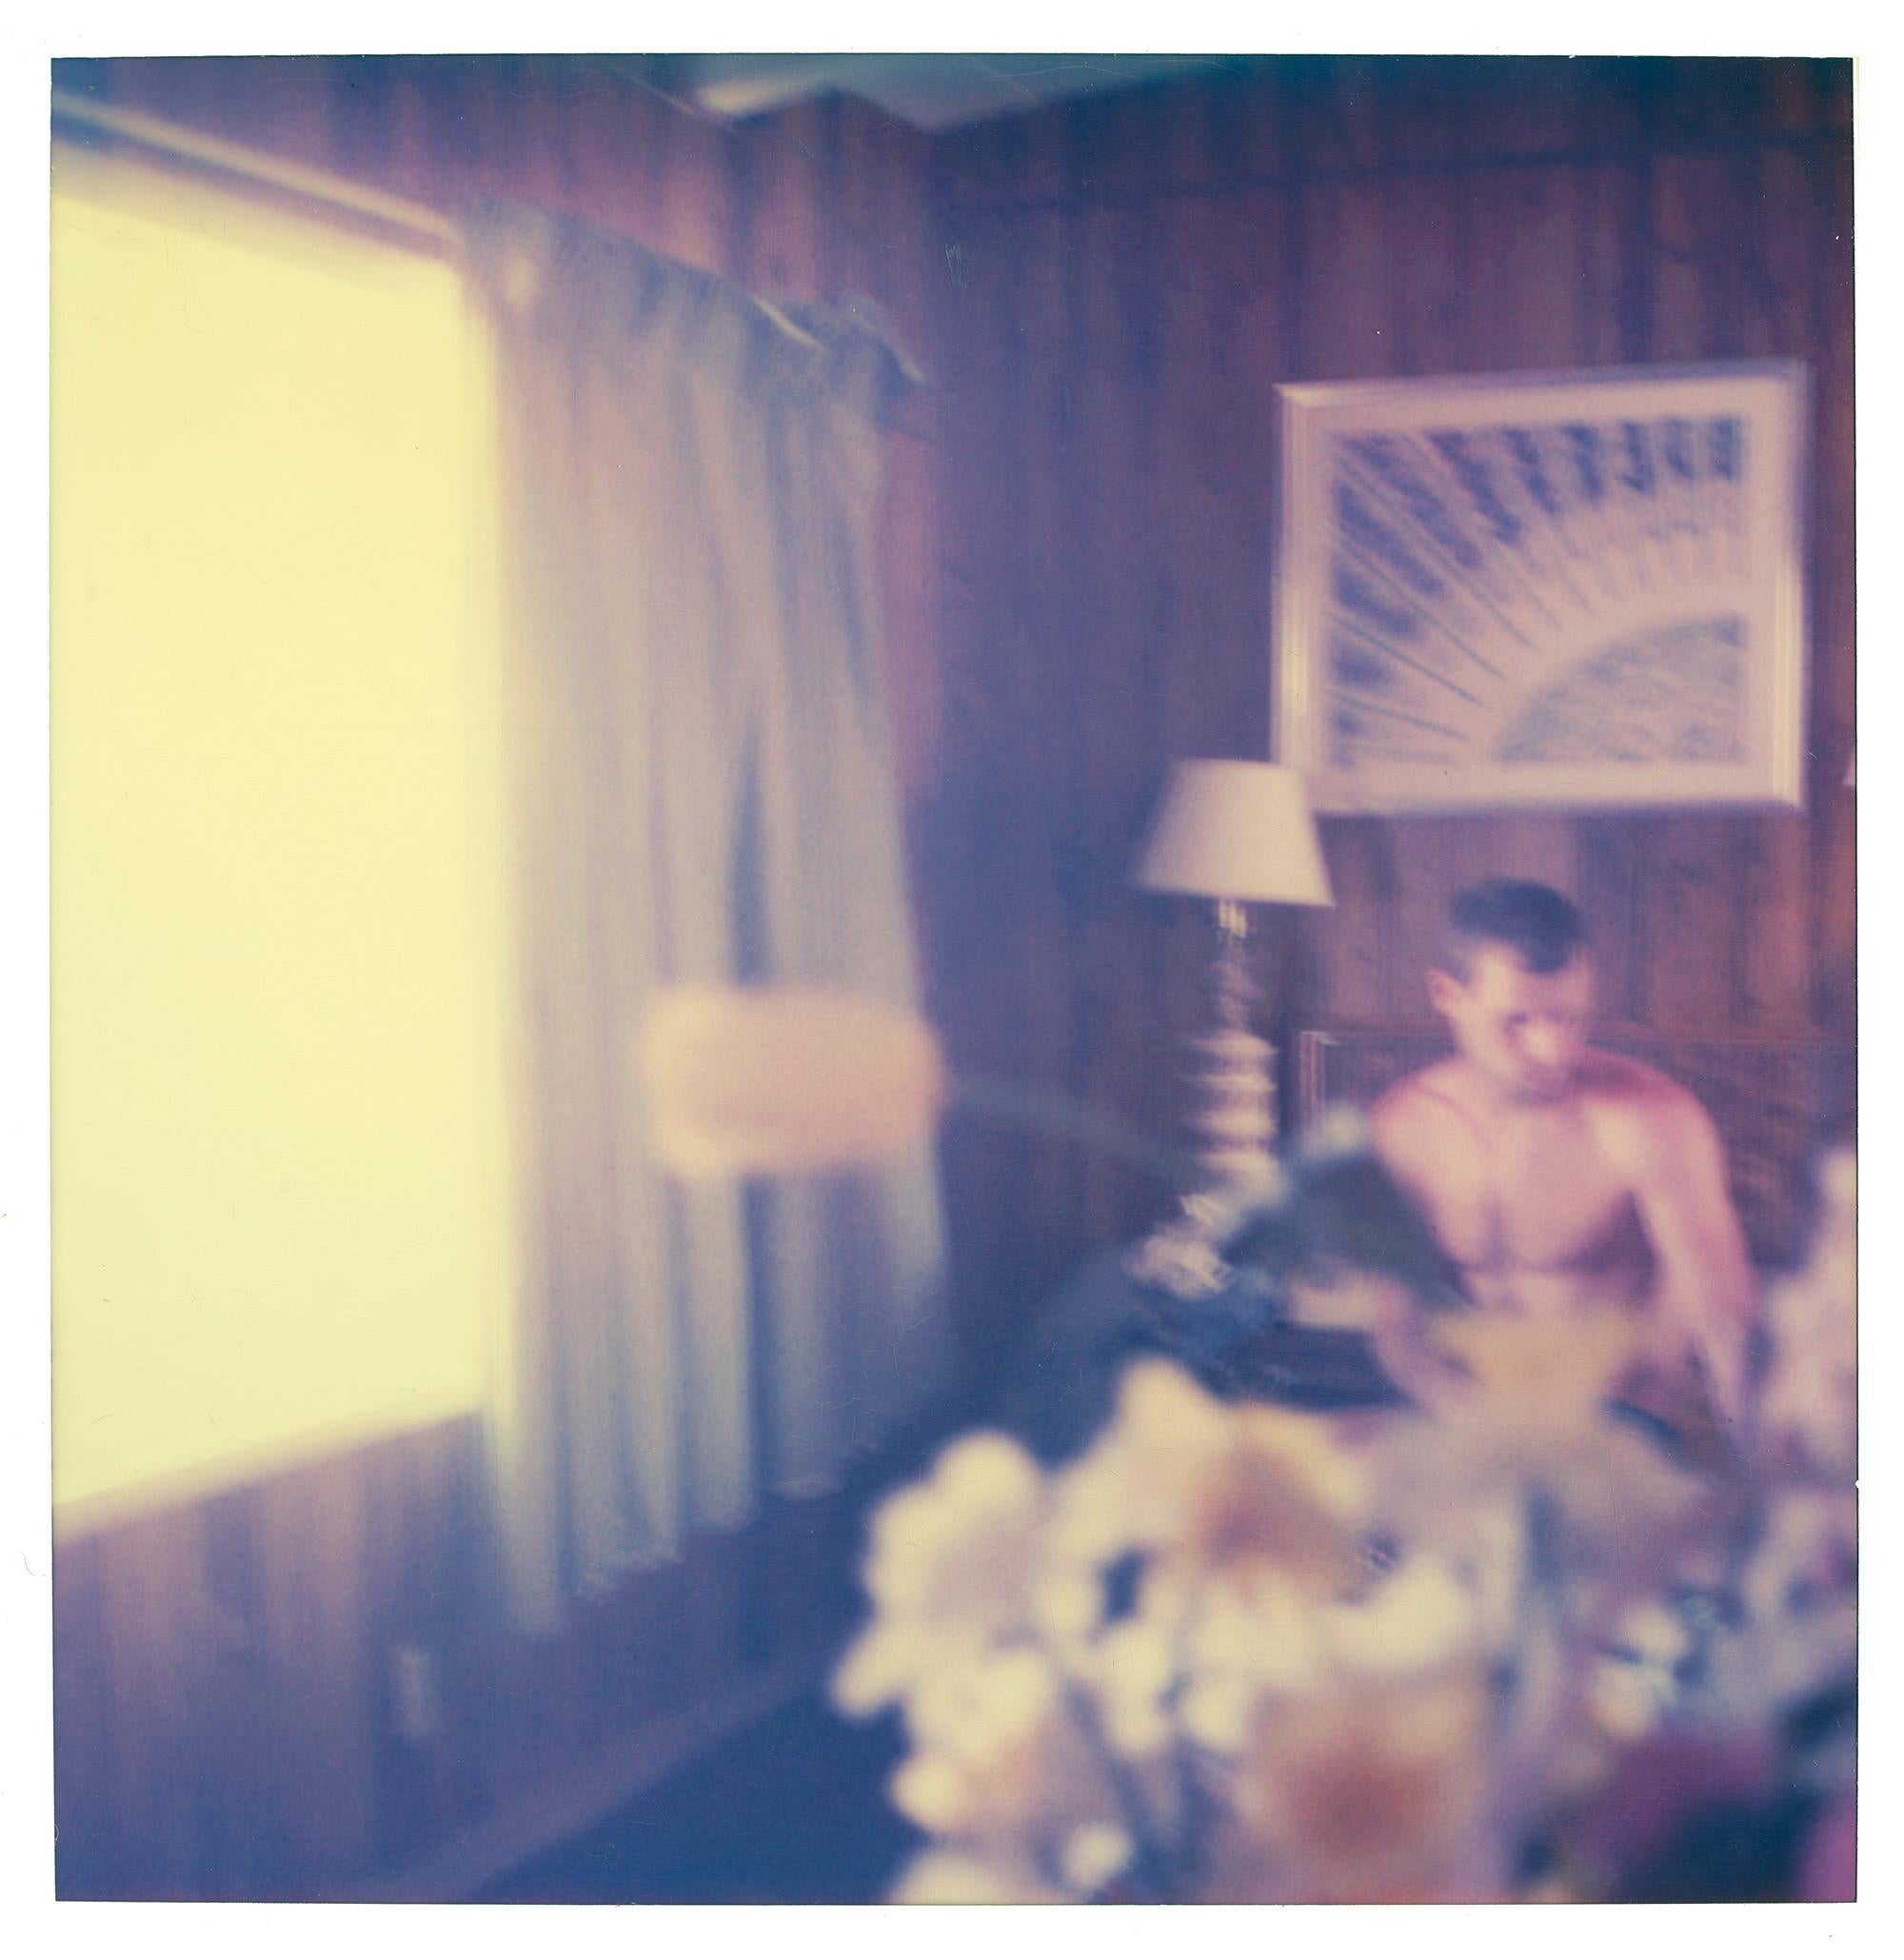 Stefanie Schneider Nude Photograph - Outtake (29 Palms, CA) - 58x56cm, analog, Polaroid, Contemporary, 20th Century